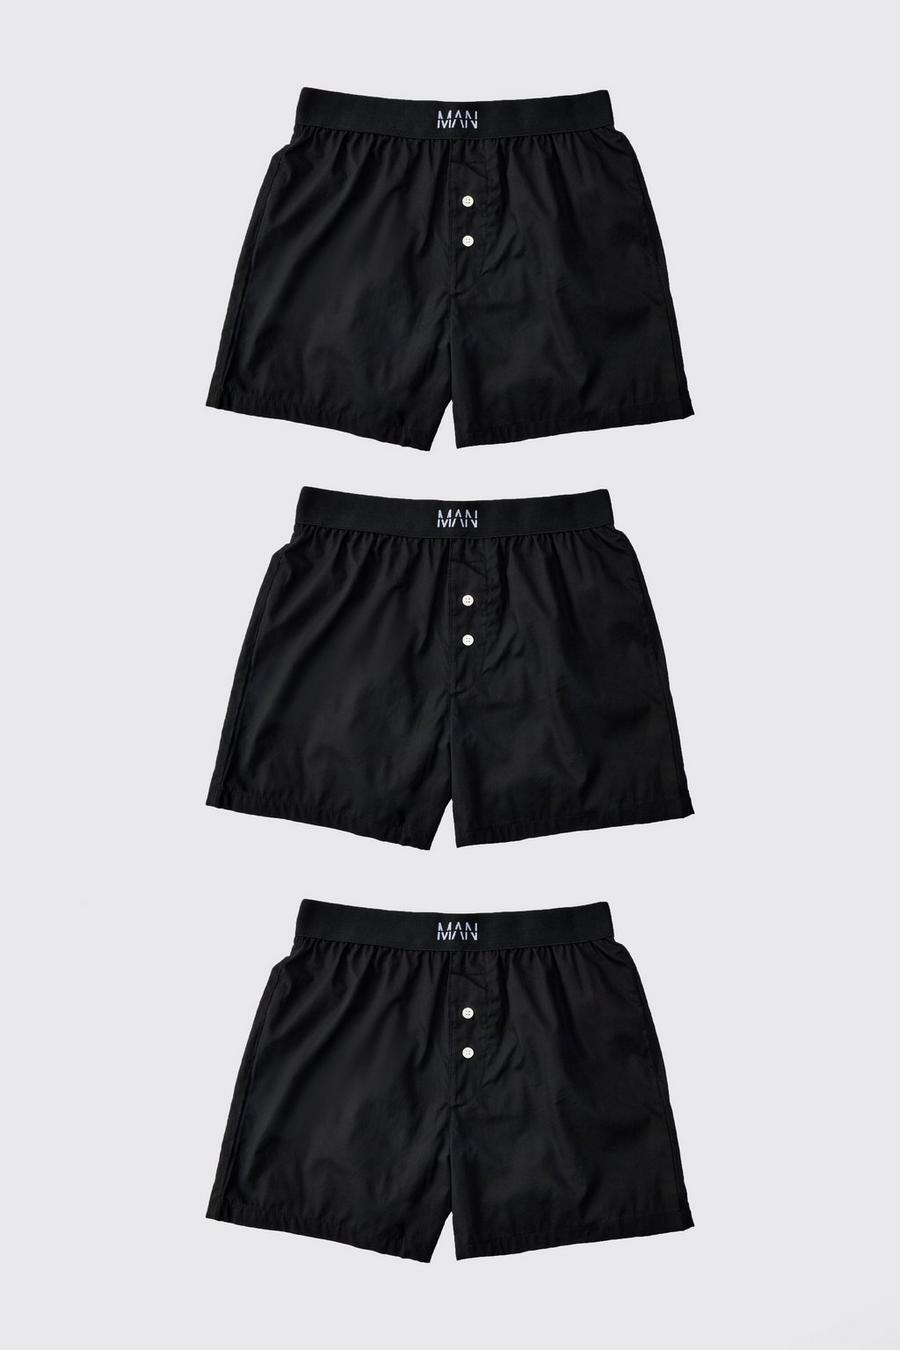 Black 3 Pack Original Man Woven Boxer Shorts